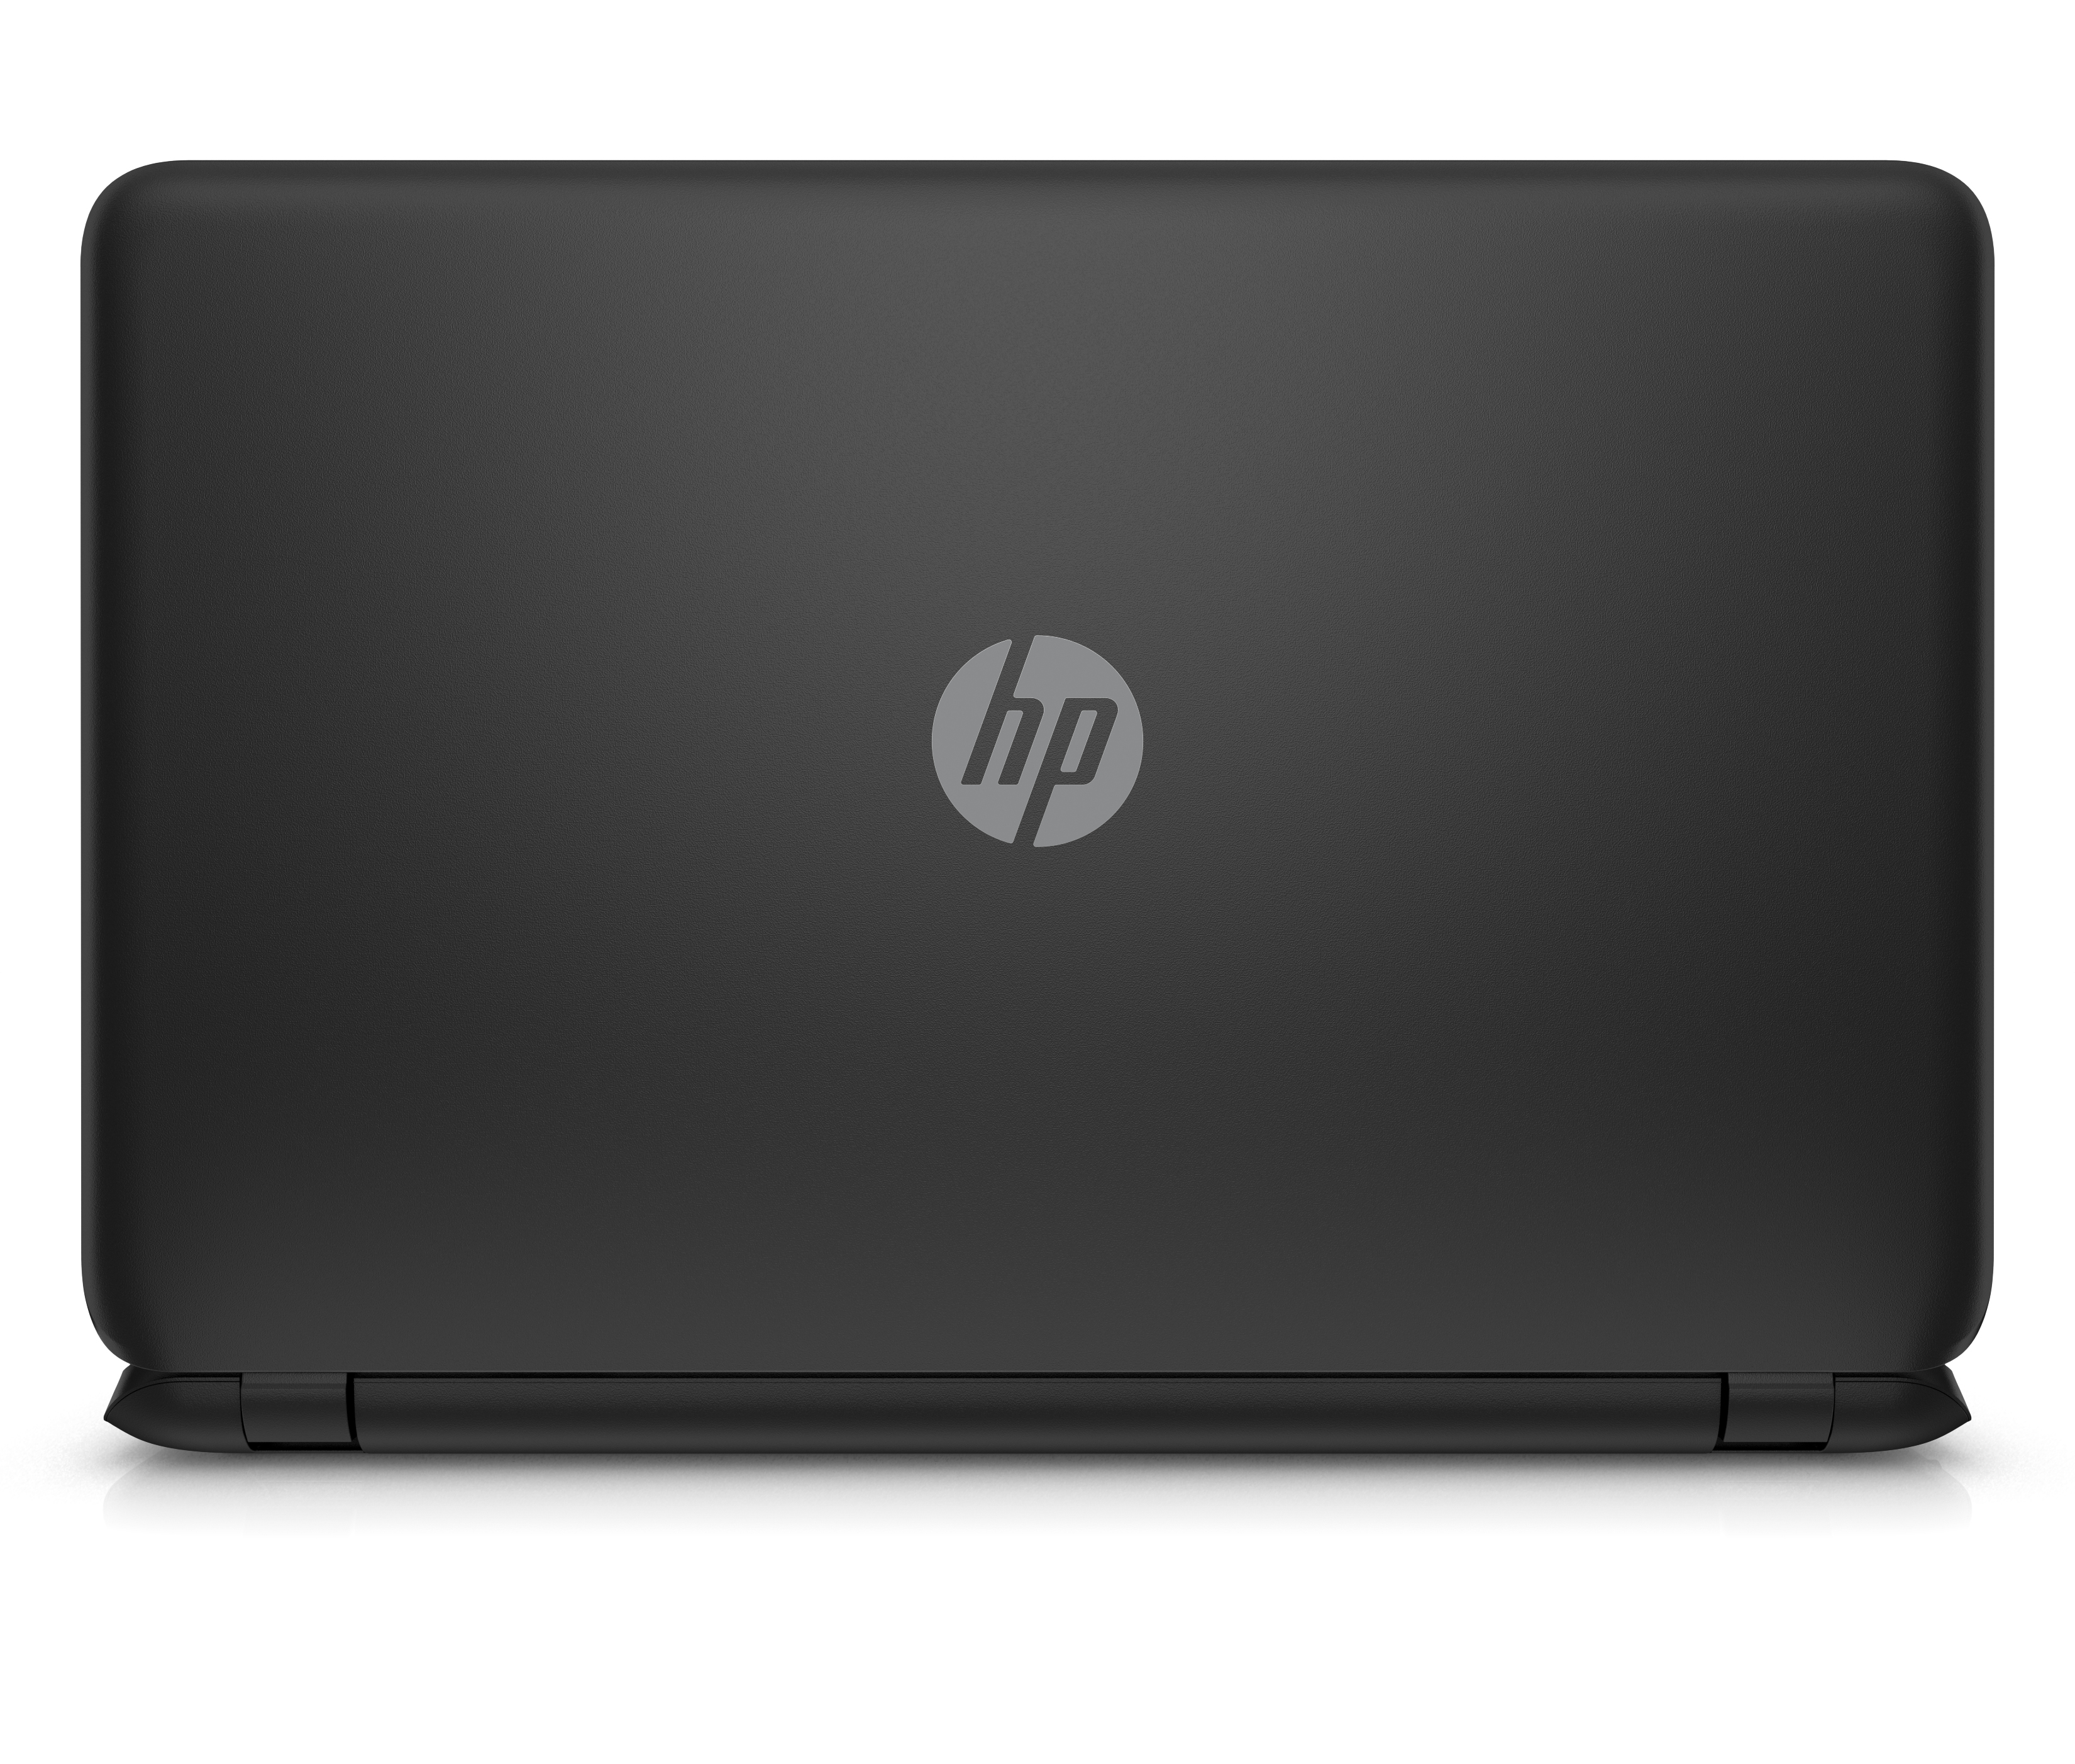 HP 15-f246wm 15.6" Laptop", Intel Celeron N2840, Intel HD Graphics, 500GB HDD, 4GB RAM, 15-F246WM Black - image 4 of 4